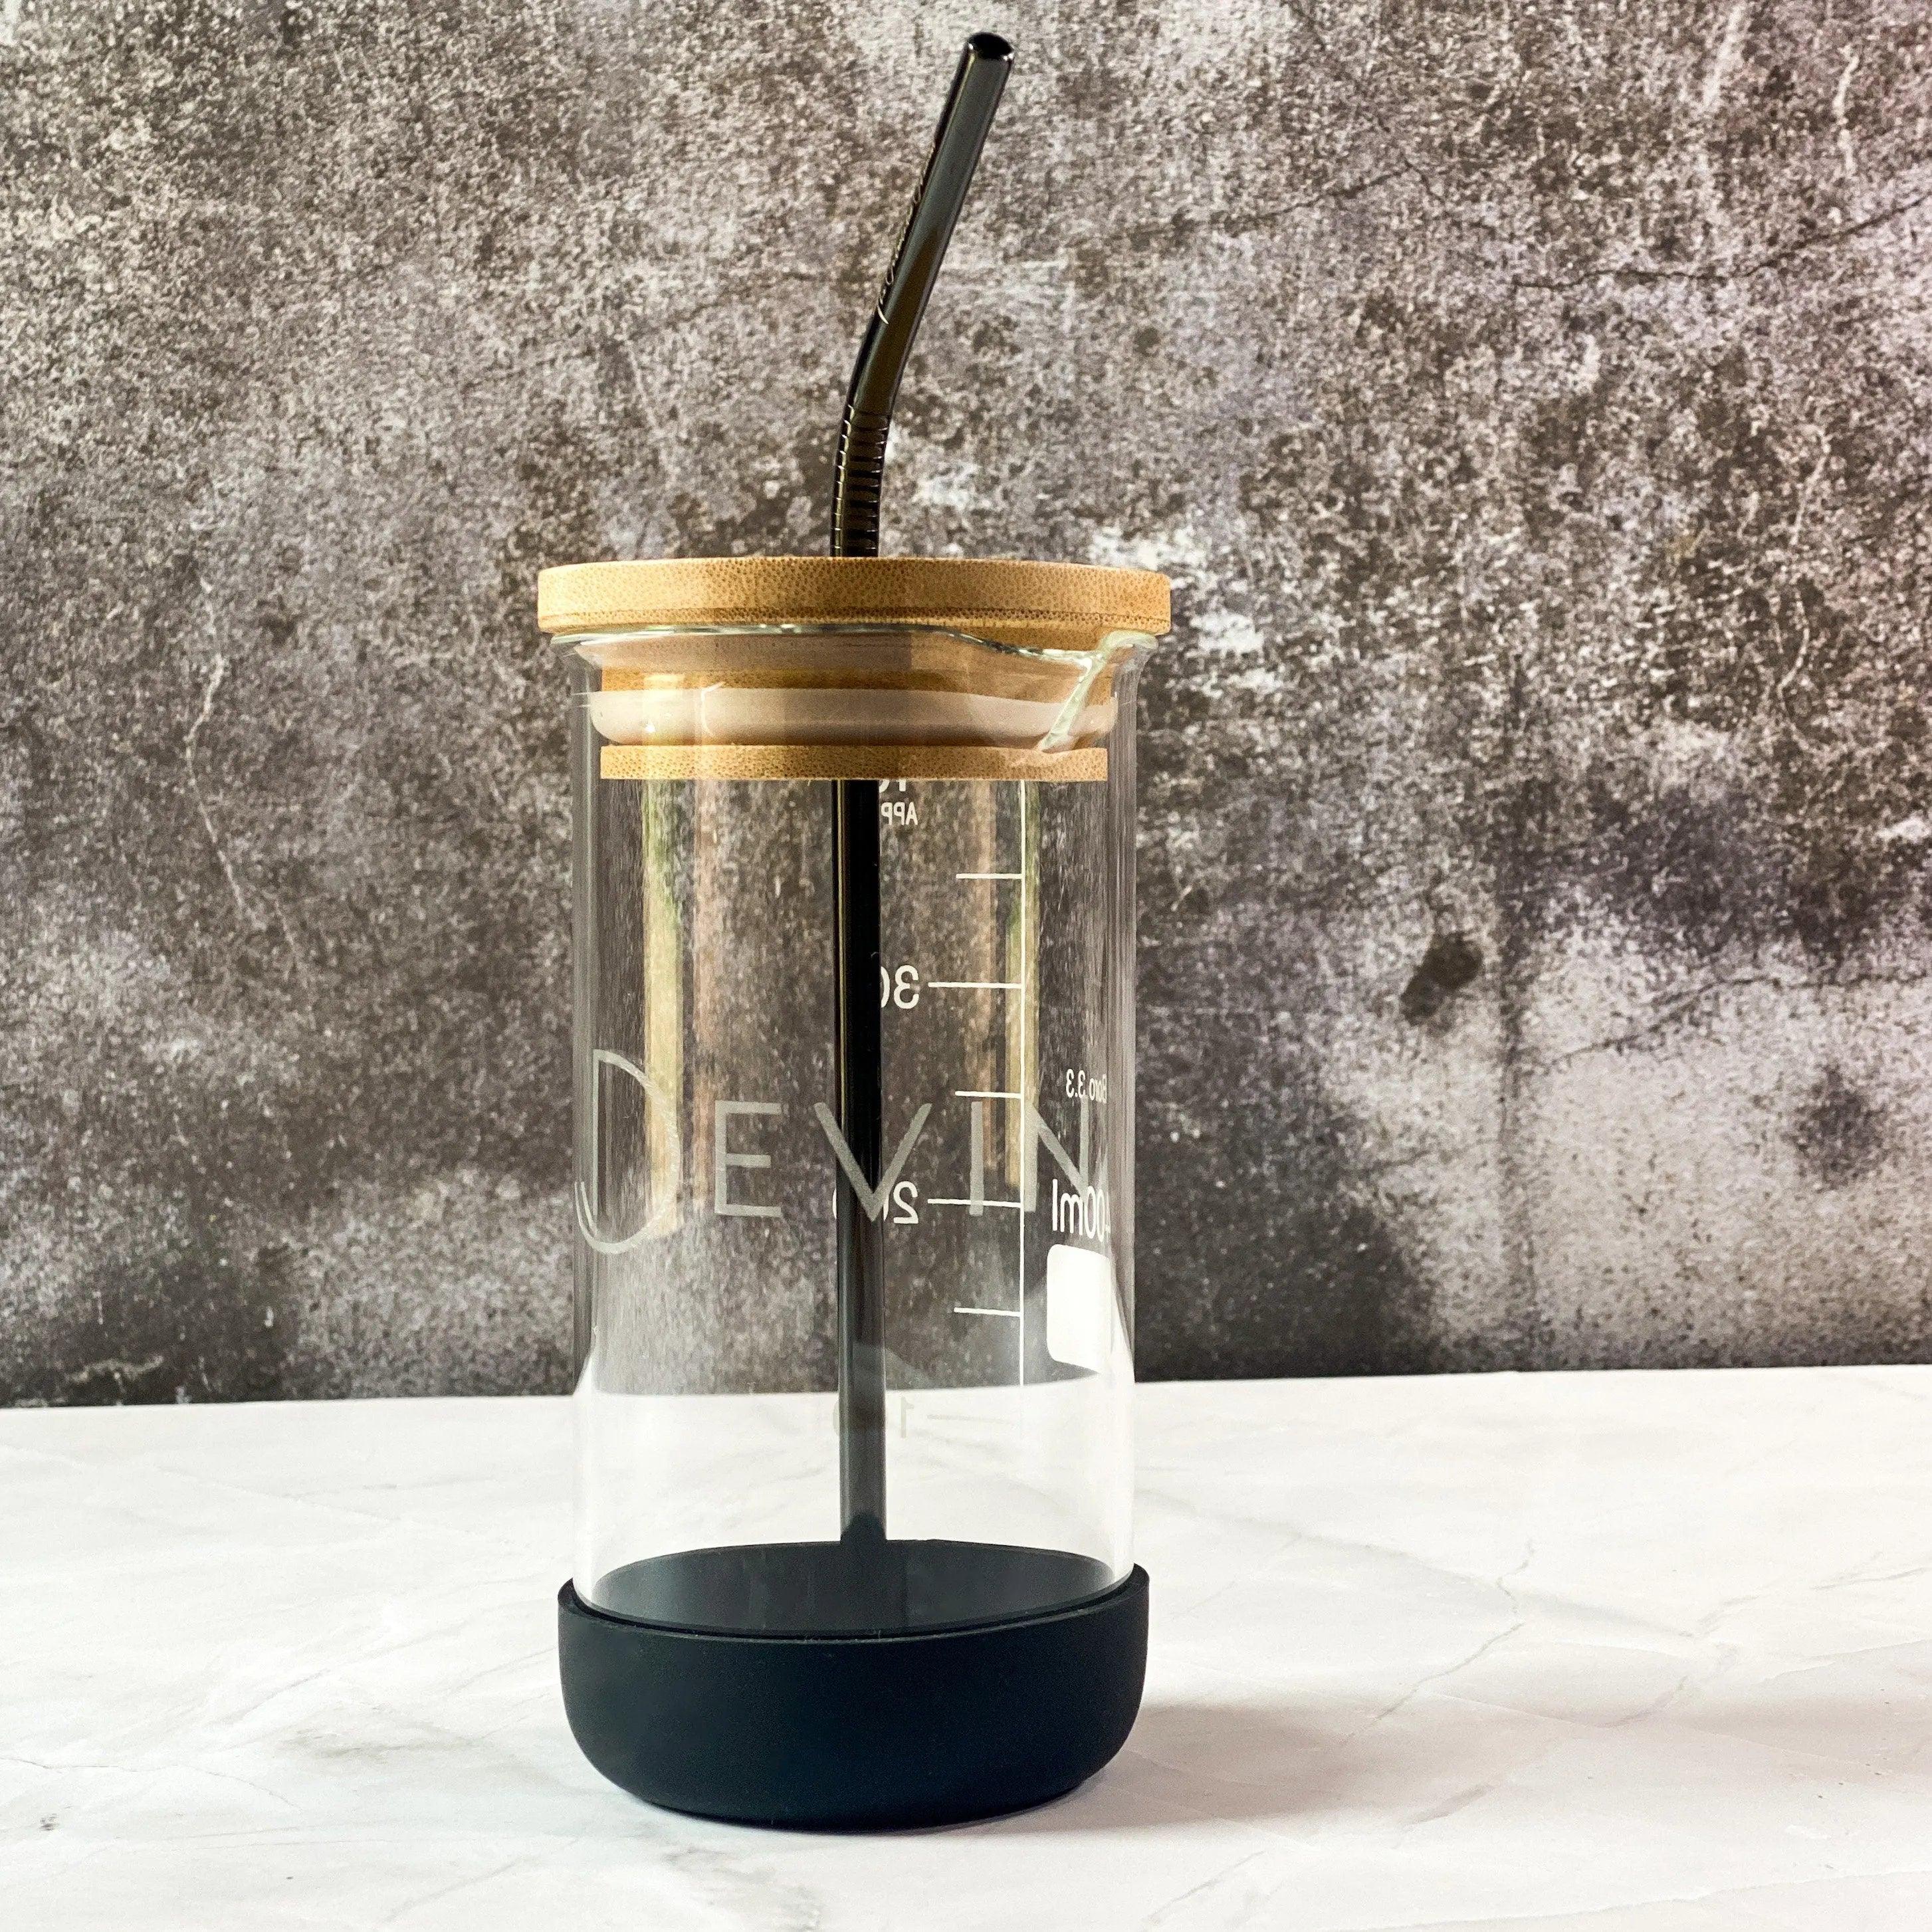 Chemistry Beaker Drink Tumbler with Reusable Straw Set